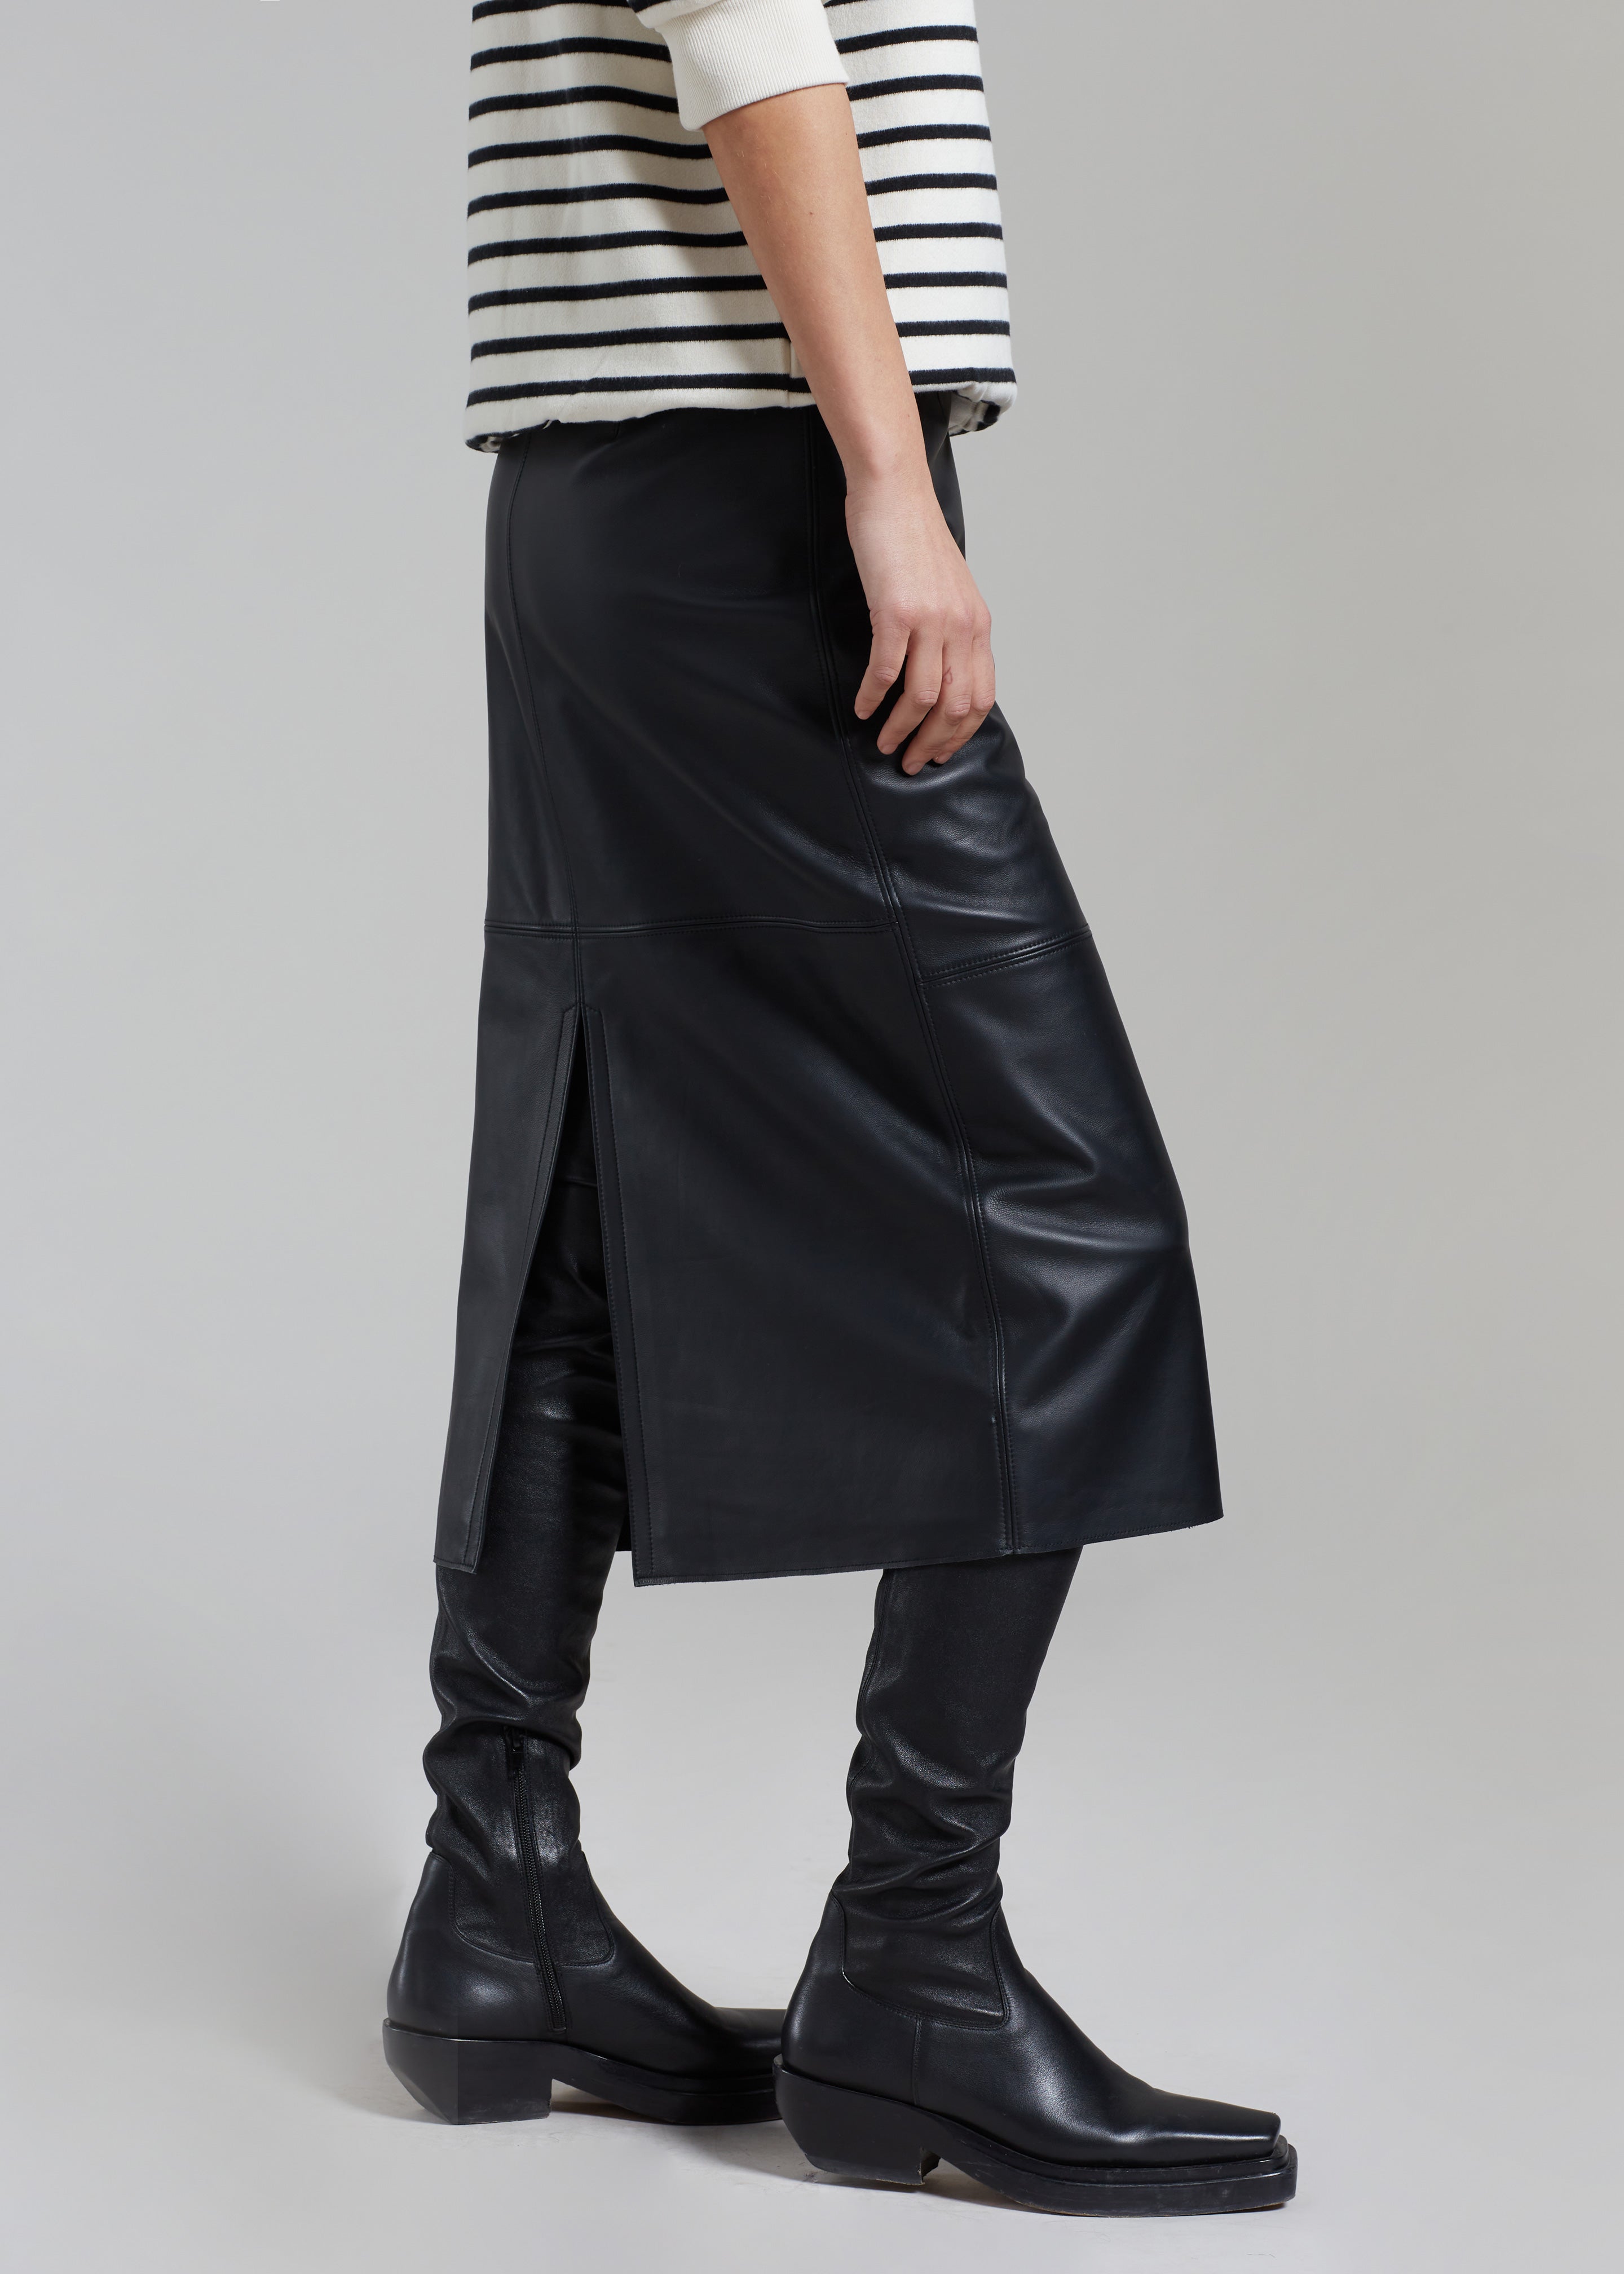 Heather Leather Pencil Skirt - Black - 2